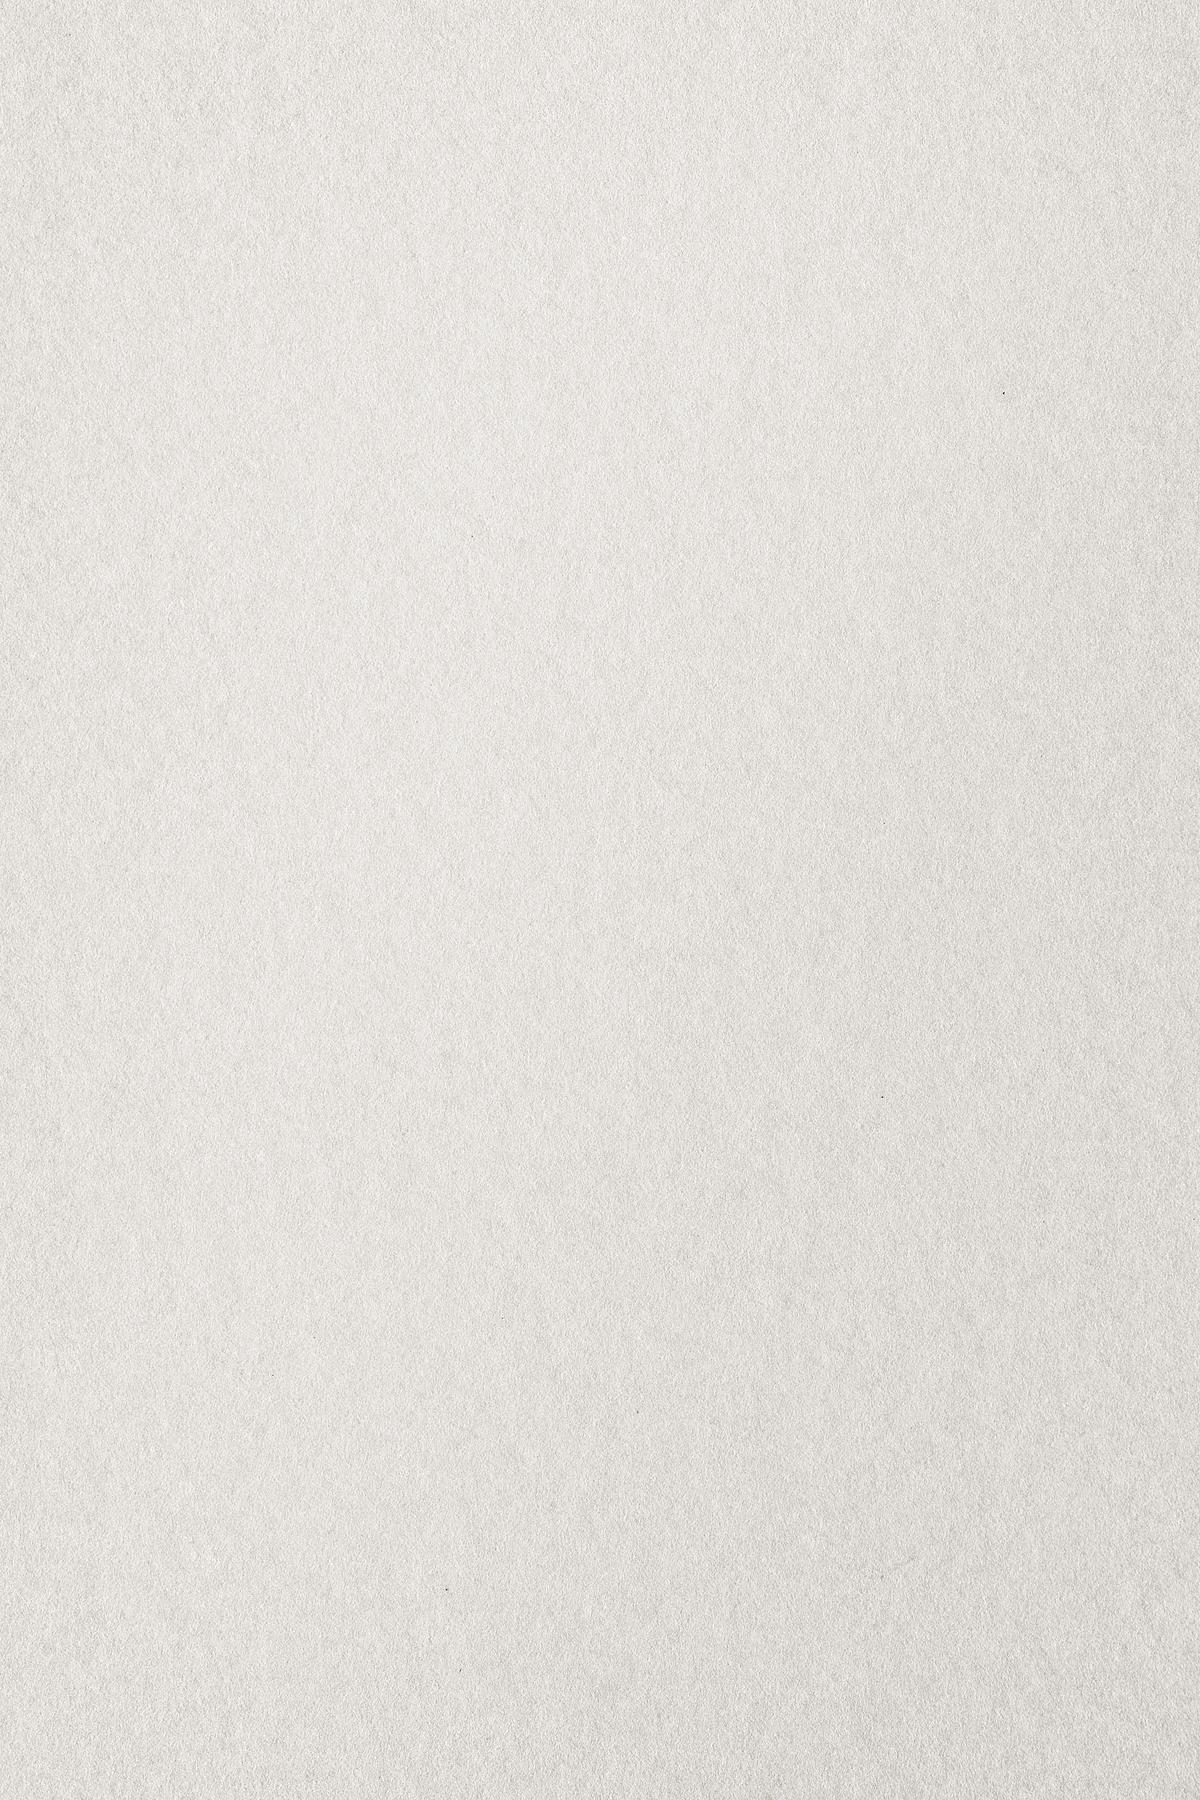 Gray plain paper textured background | Premium Photo - rawpixel